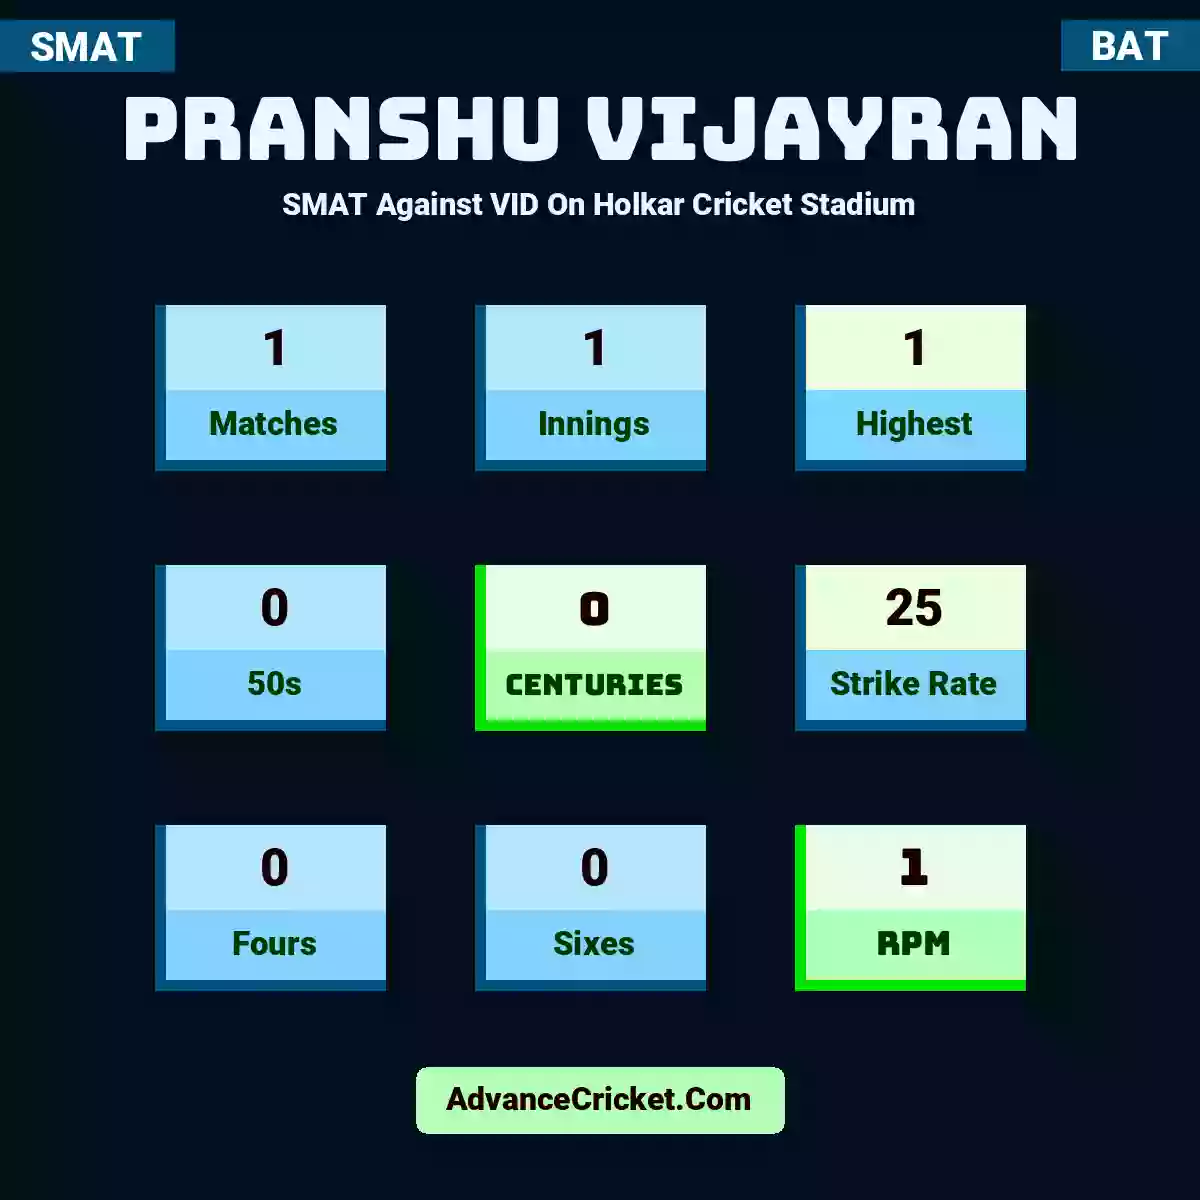 Pranshu Vijayran SMAT  Against VID On Holkar Cricket Stadium, Pranshu Vijayran played 1 matches, scored 1 runs as highest, 0 half-centuries, and 0 centuries, with a strike rate of 25. P.Vijayran hit 0 fours and 0 sixes, with an RPM of 1.